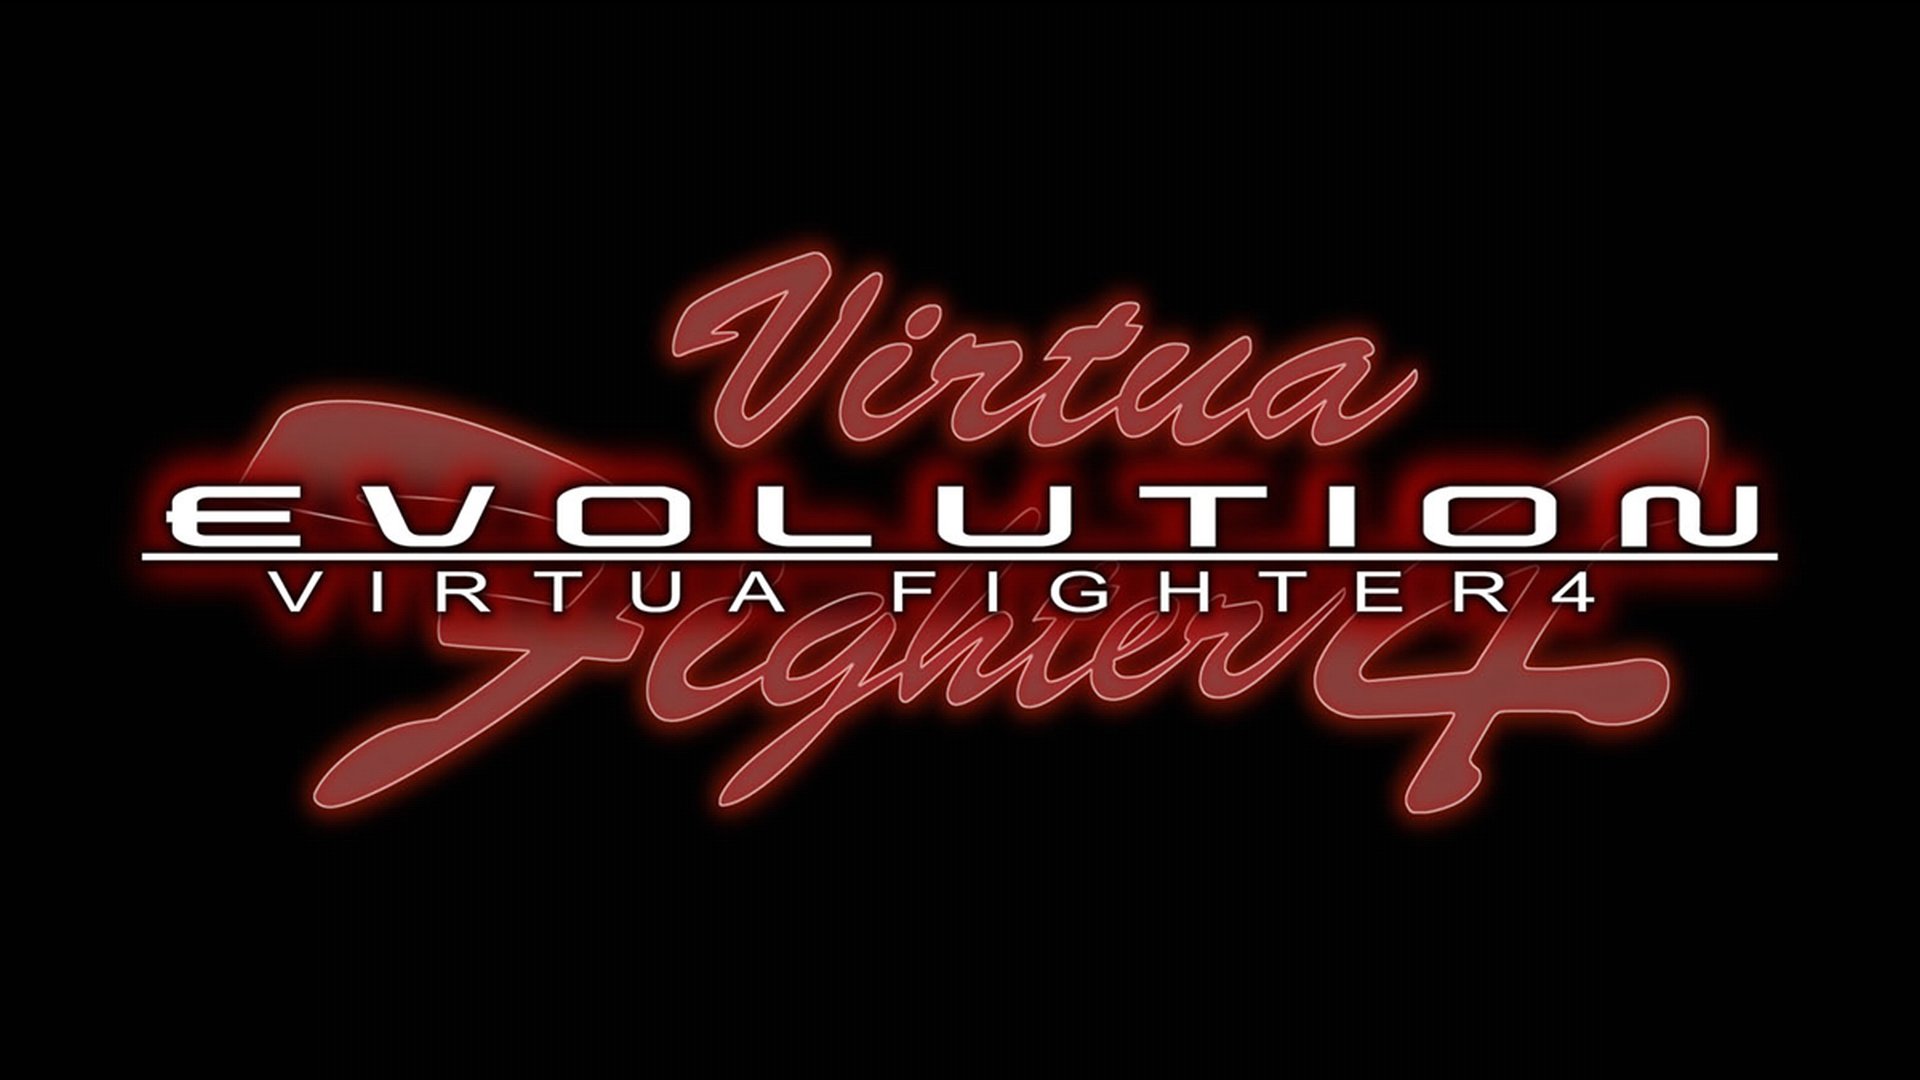 video game, virtua fighter 4: evolution, virtua fighter